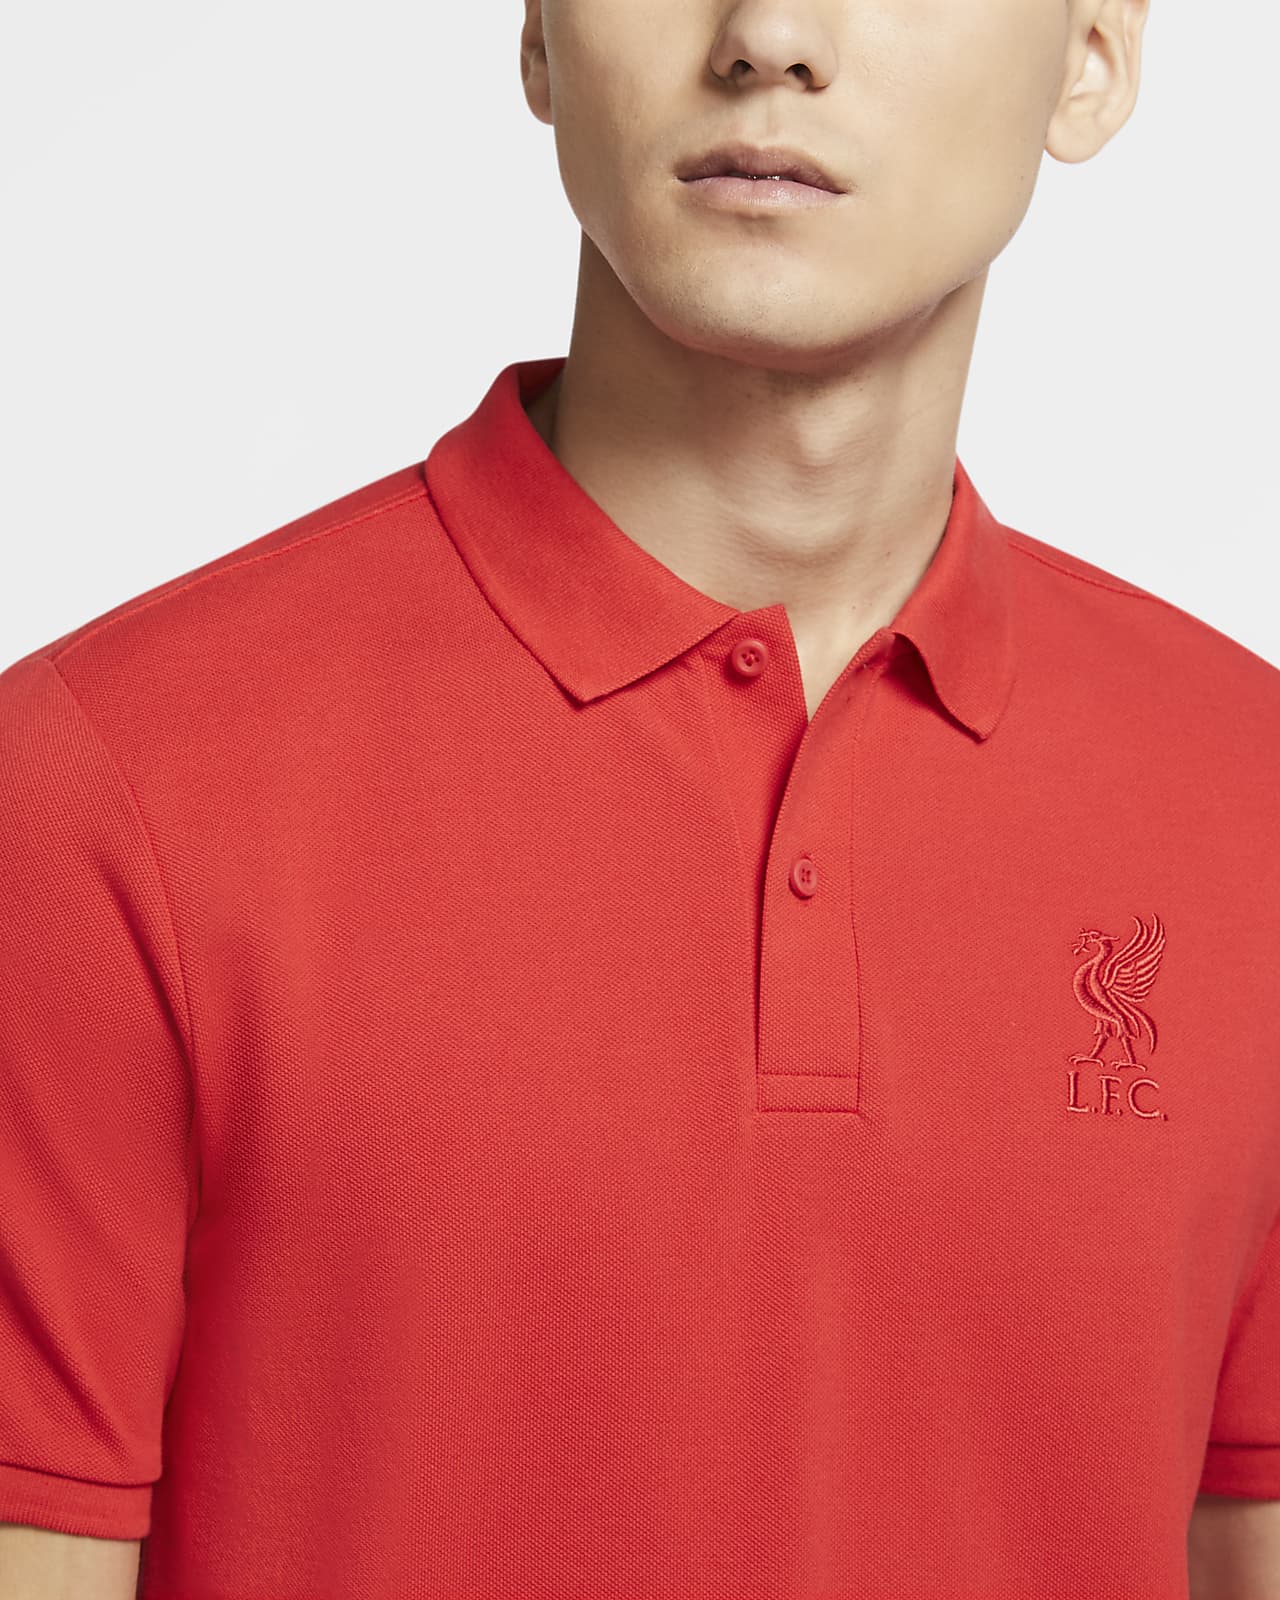 Liverpool F.C. Men's Polo. Nike LU